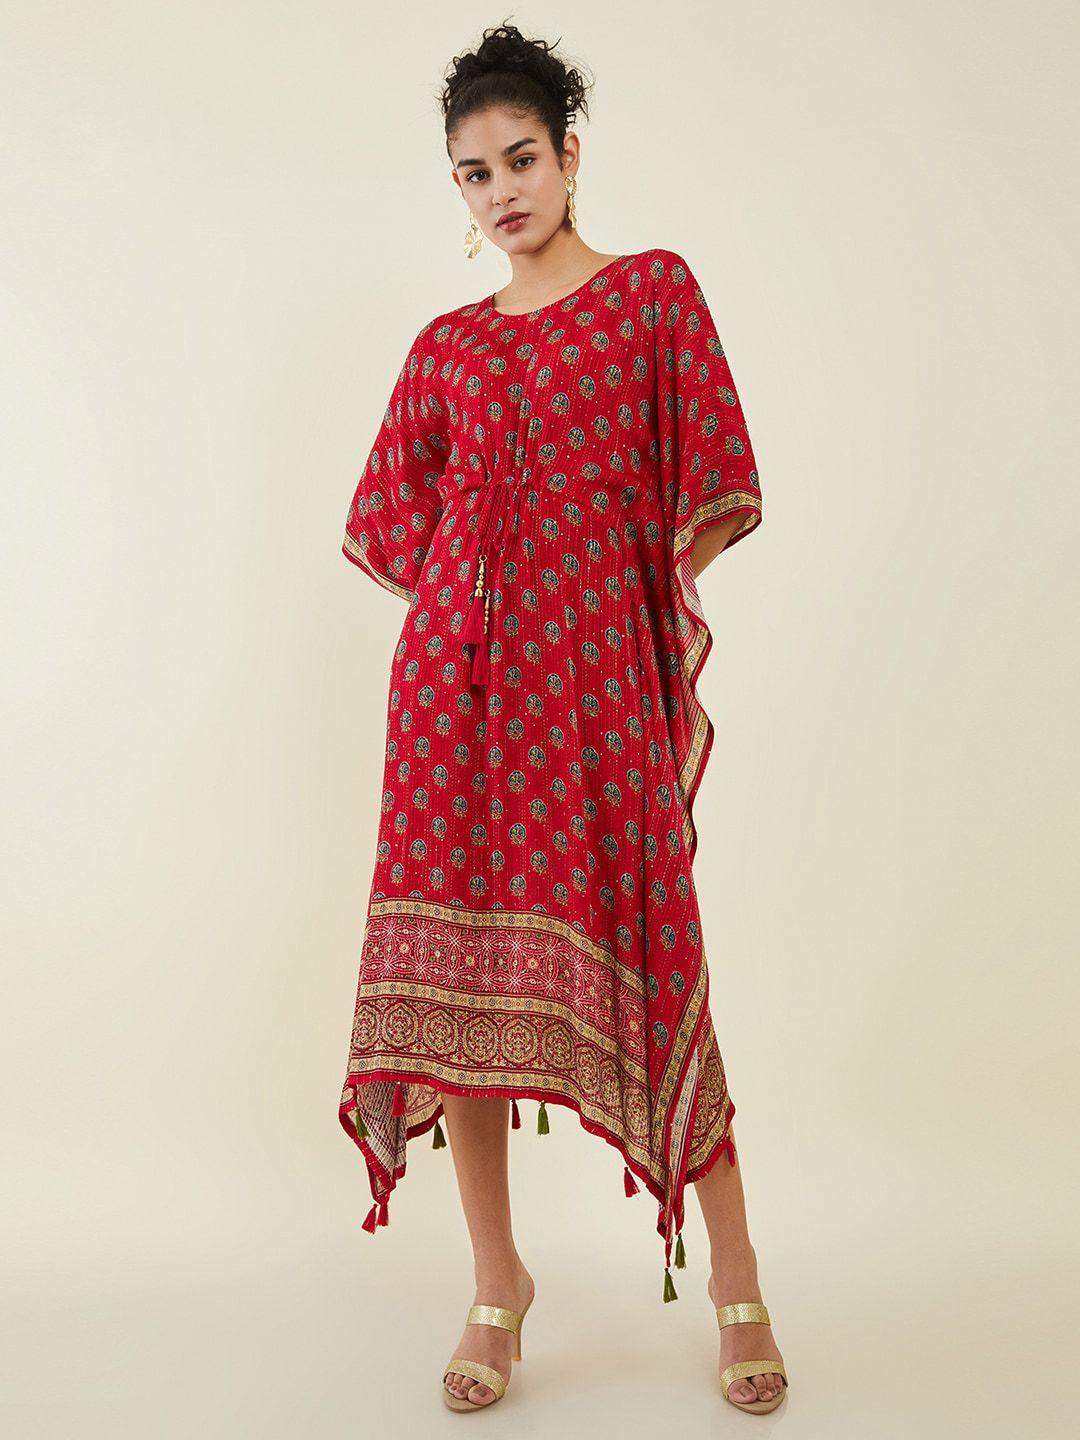 soch-red-ethnic-motifs-printed-sequined-kaftan-midi-ethnic-dress